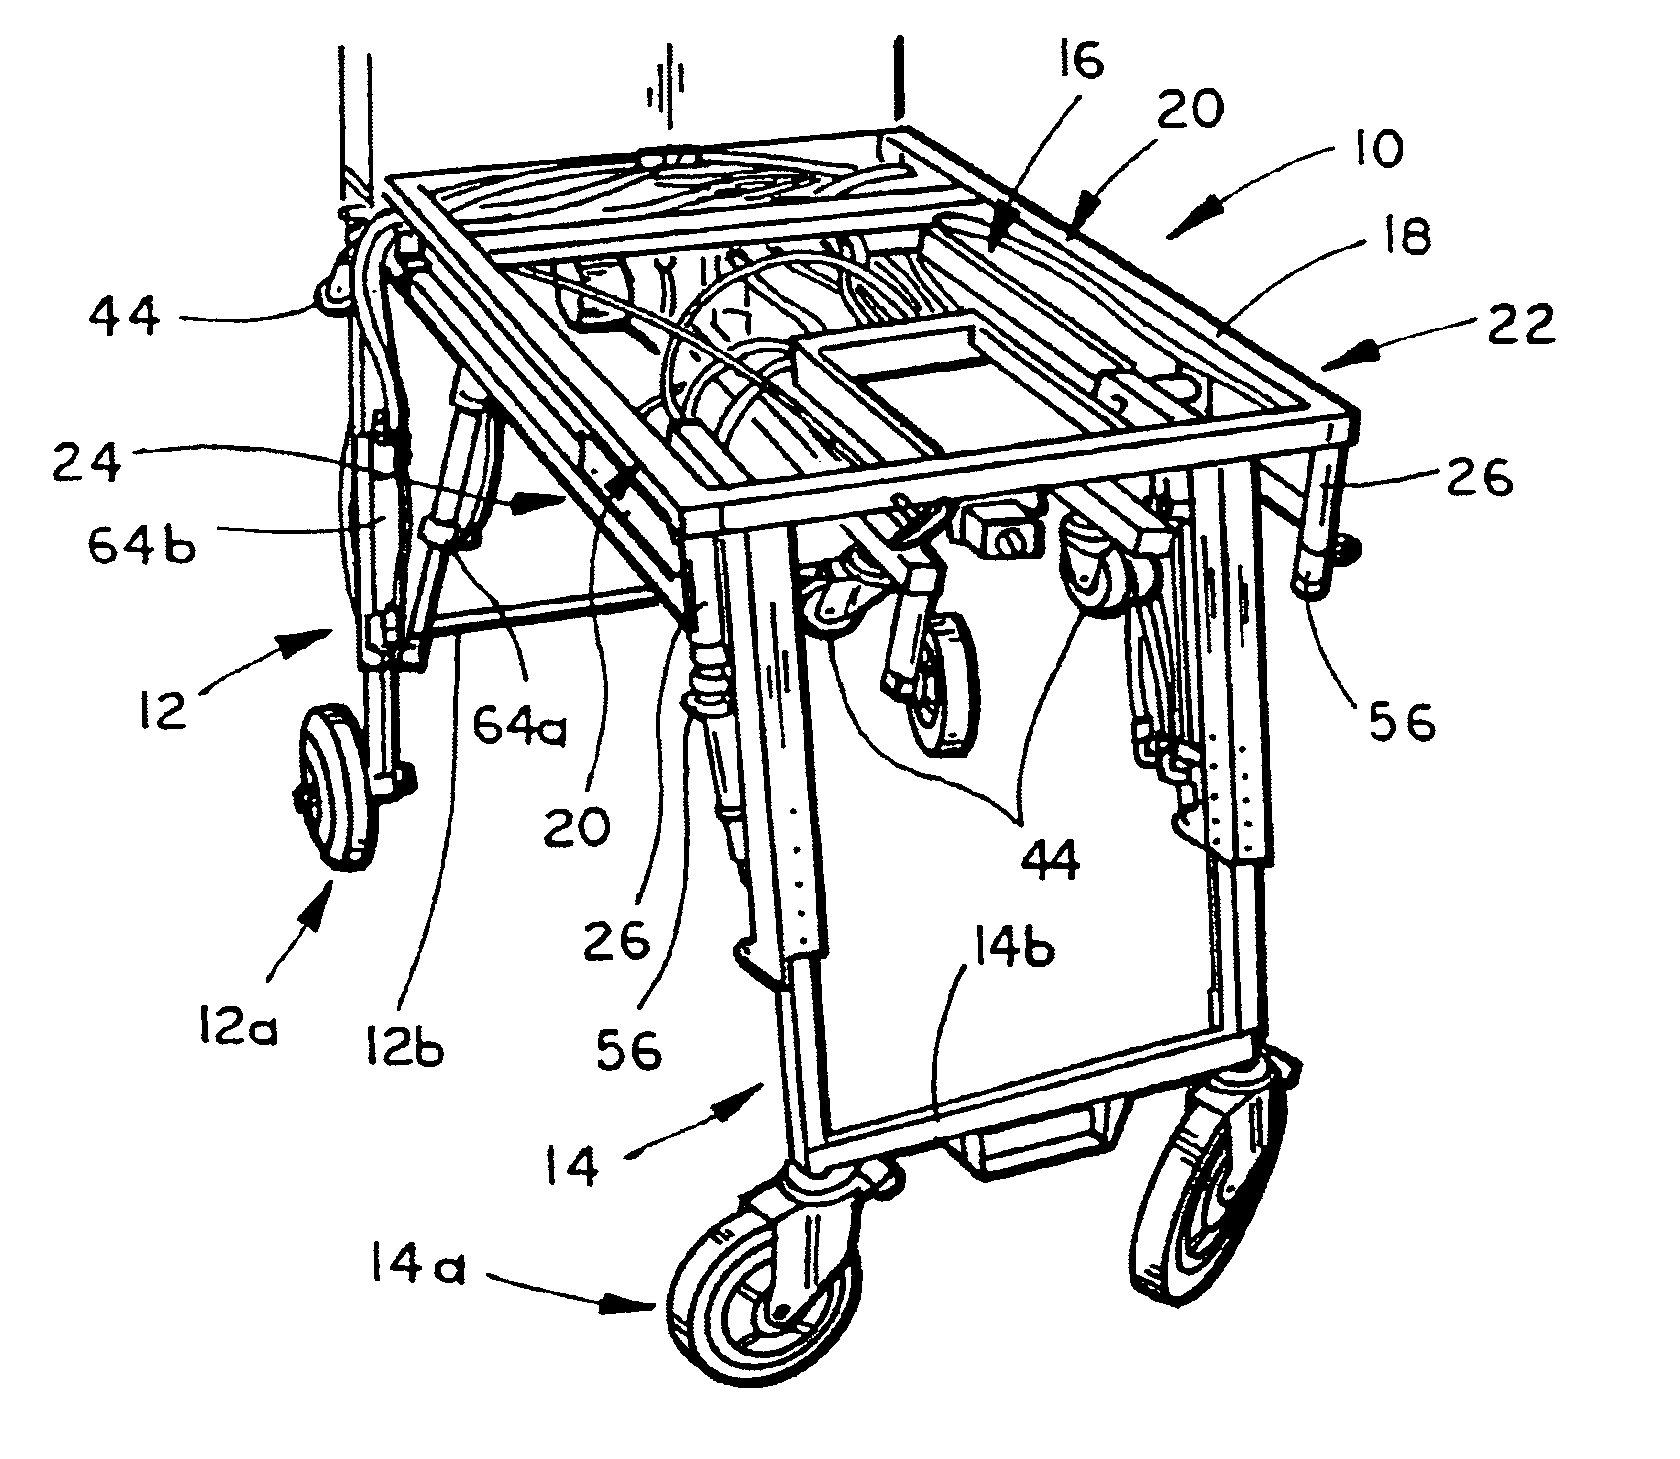 Transportable medical apparatus